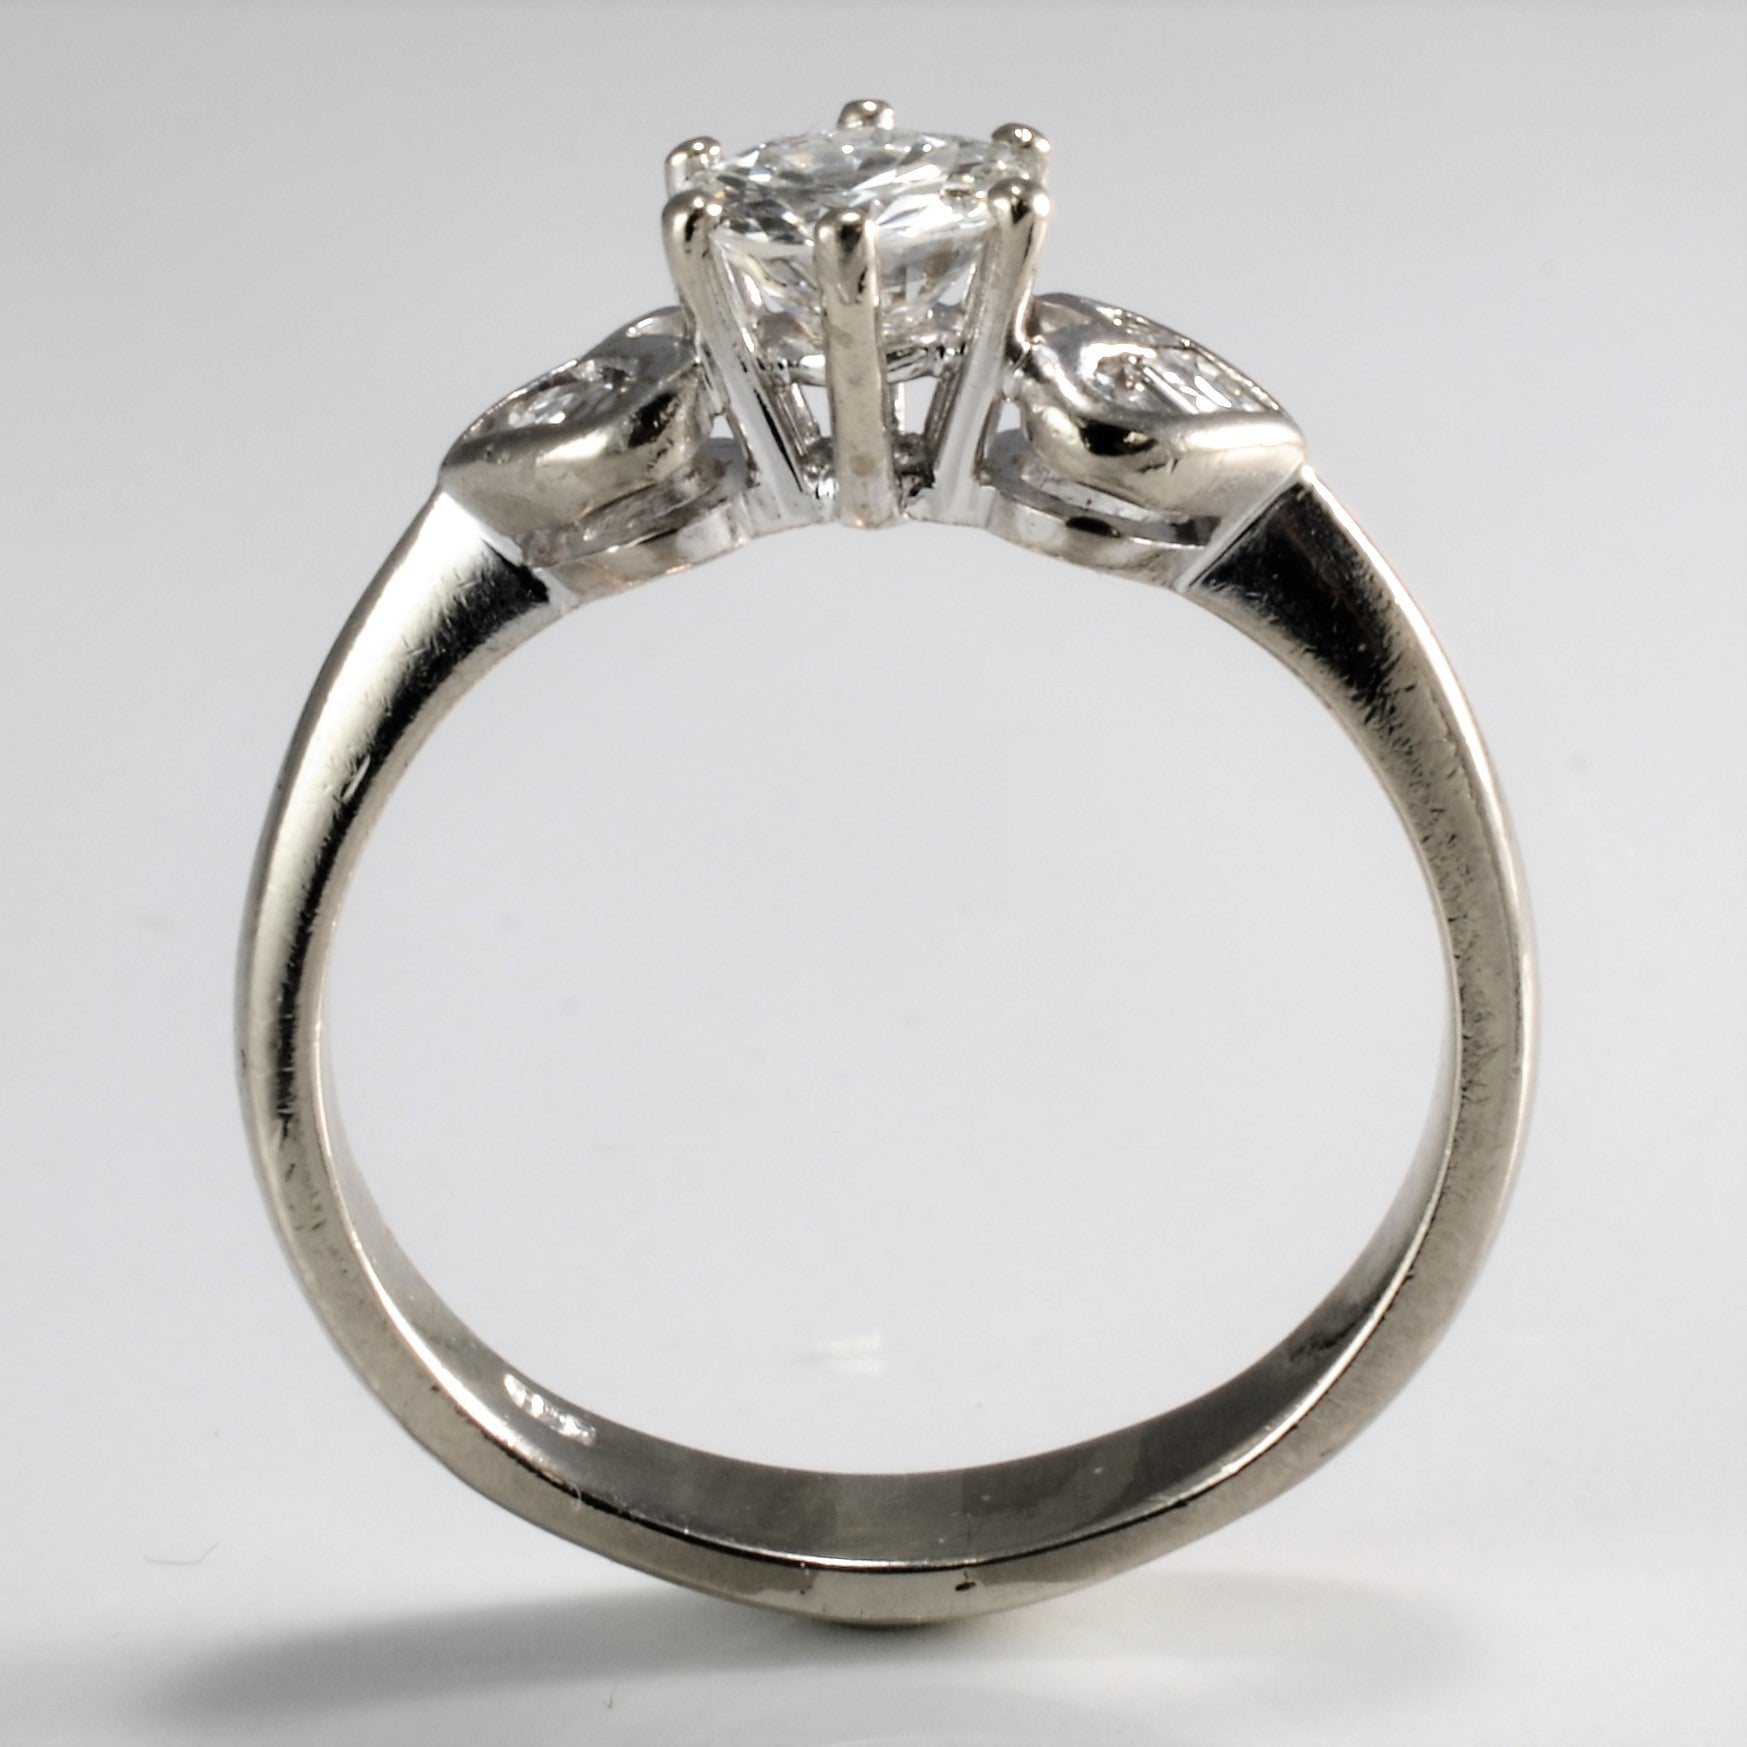 Six Prong Solitaire Diamond & Accents Engagement Ring | 1.00 ctw, SZ 7 |